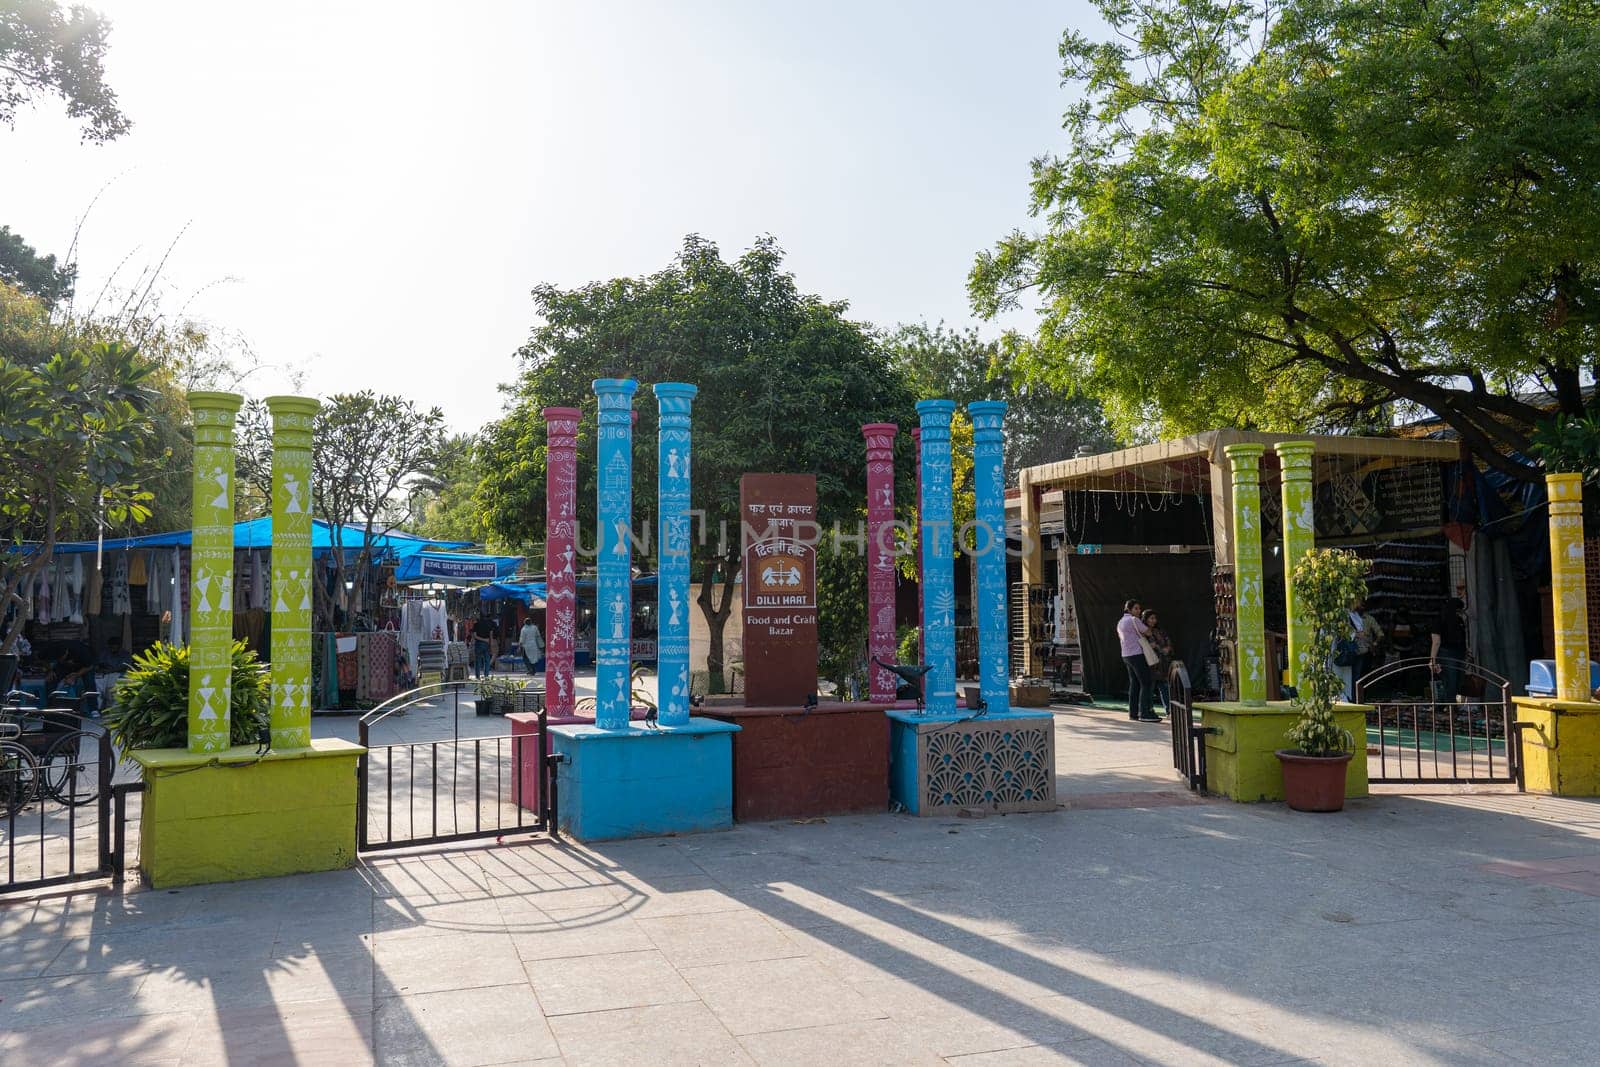 Dilli Haat Food and Craft Bazar in Delhi by oliverfoerstner